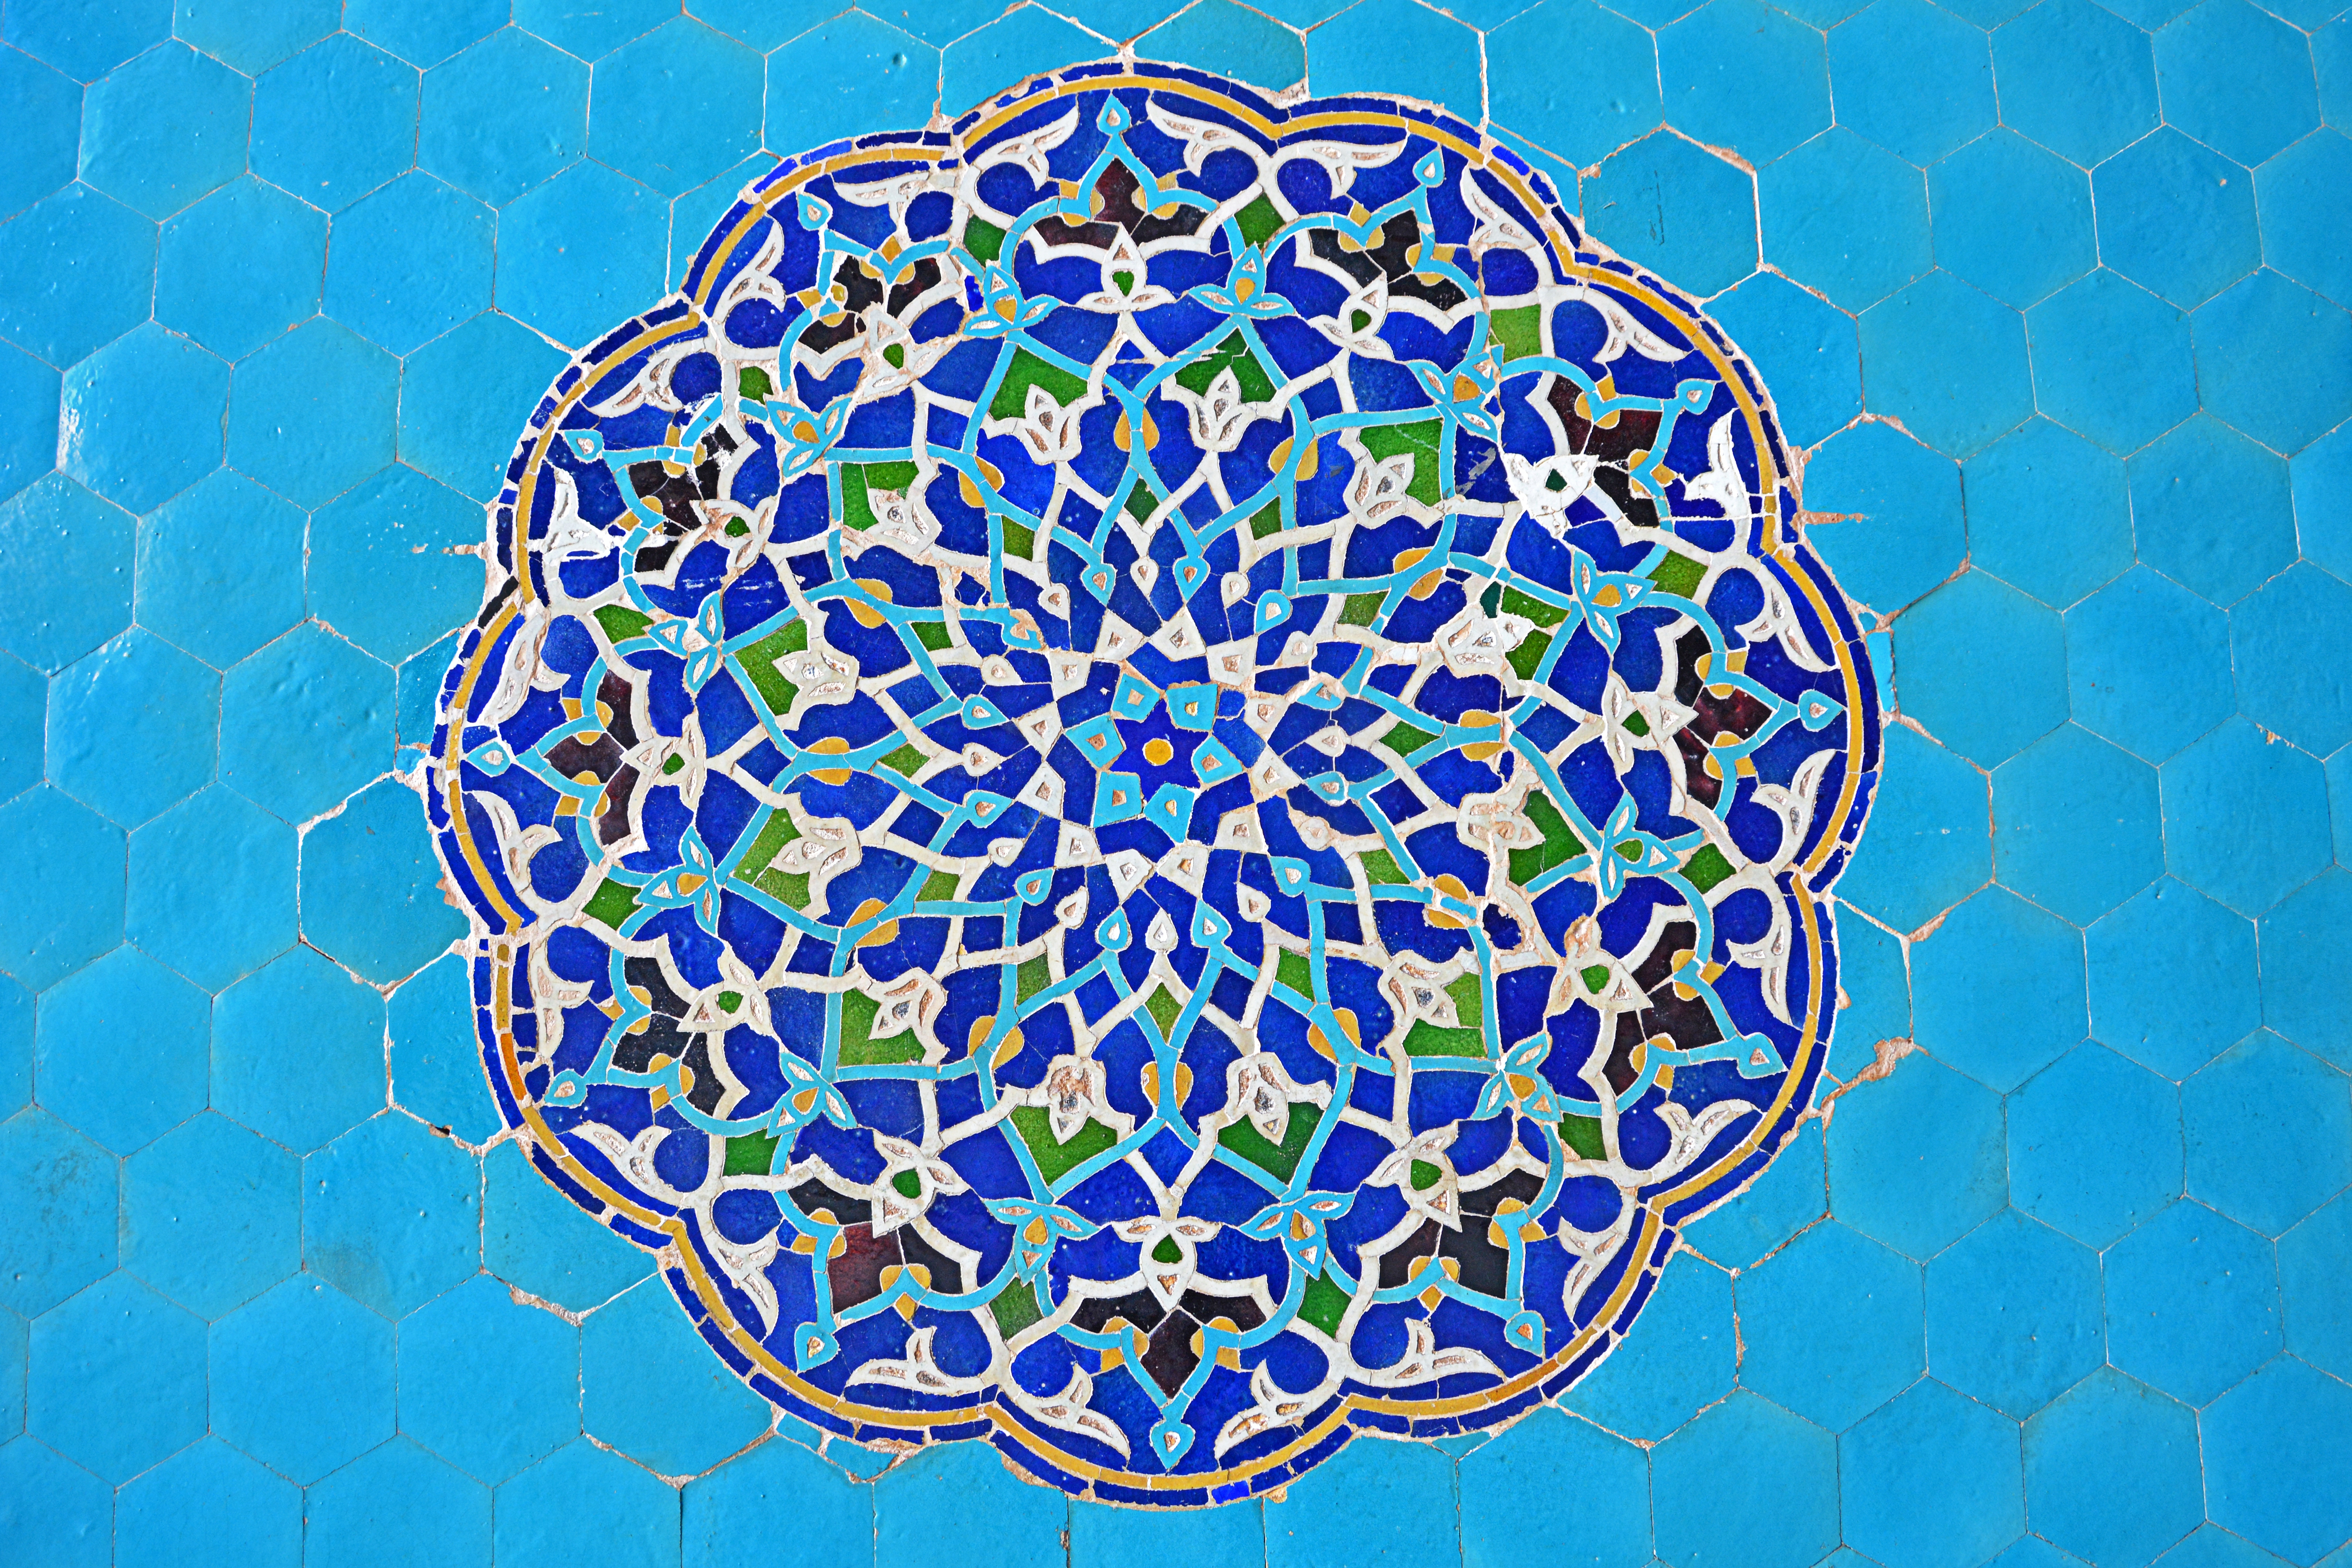 Intricate blue tile patterns